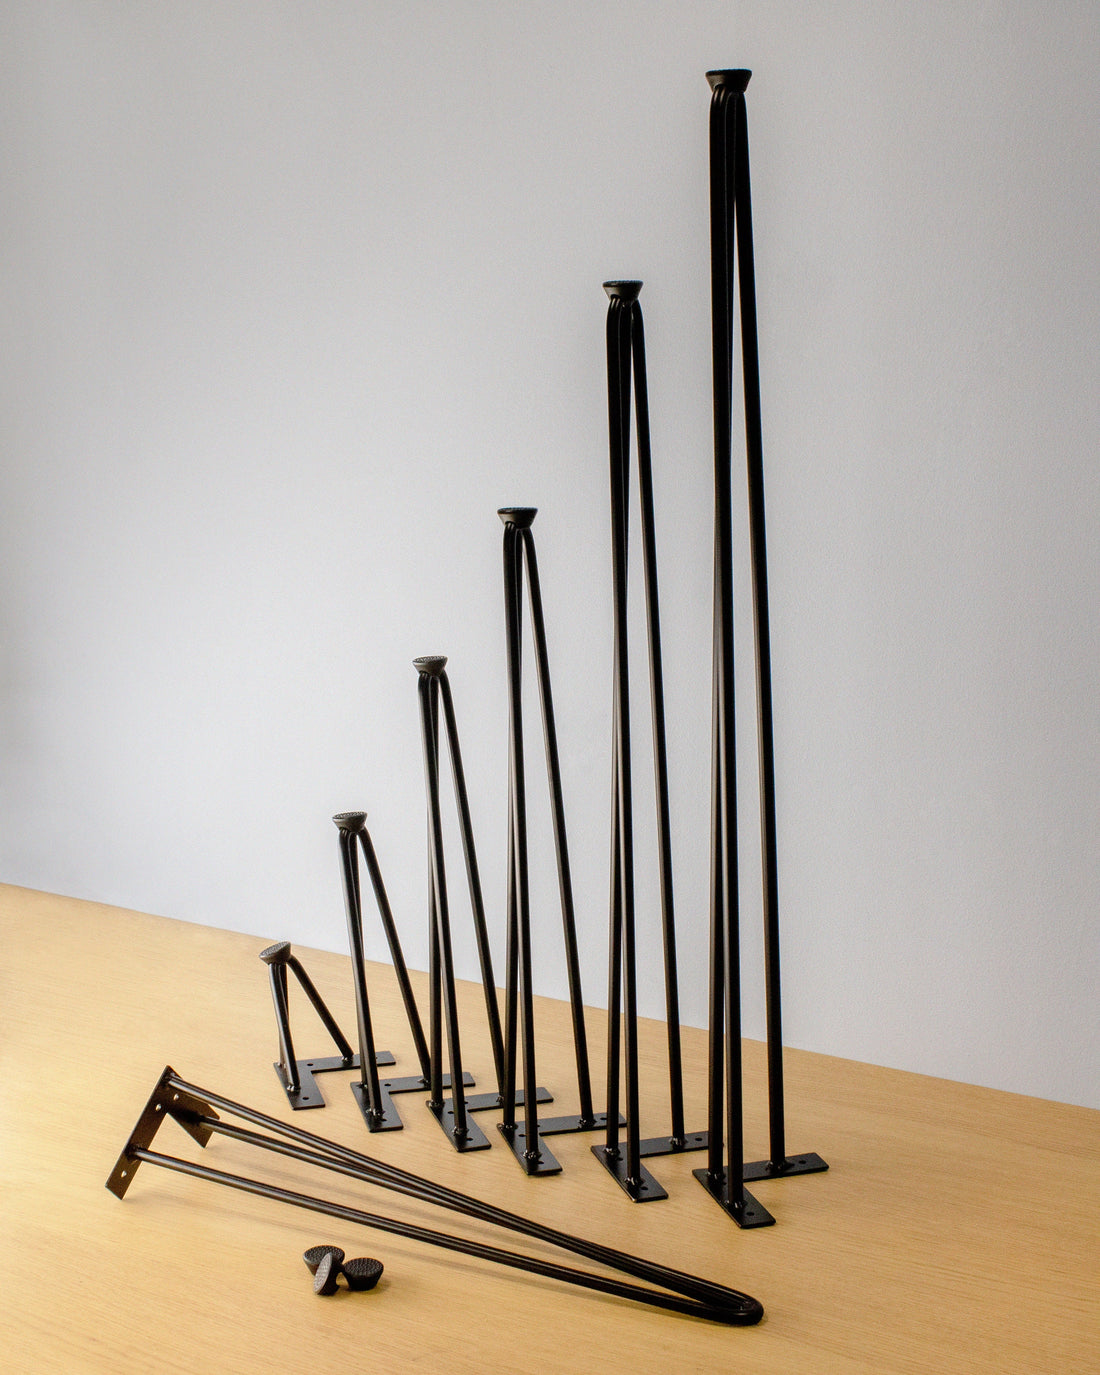 Premium Hairpin Legs Console Table legs - Black- Bare Steel UK made x 4 legs